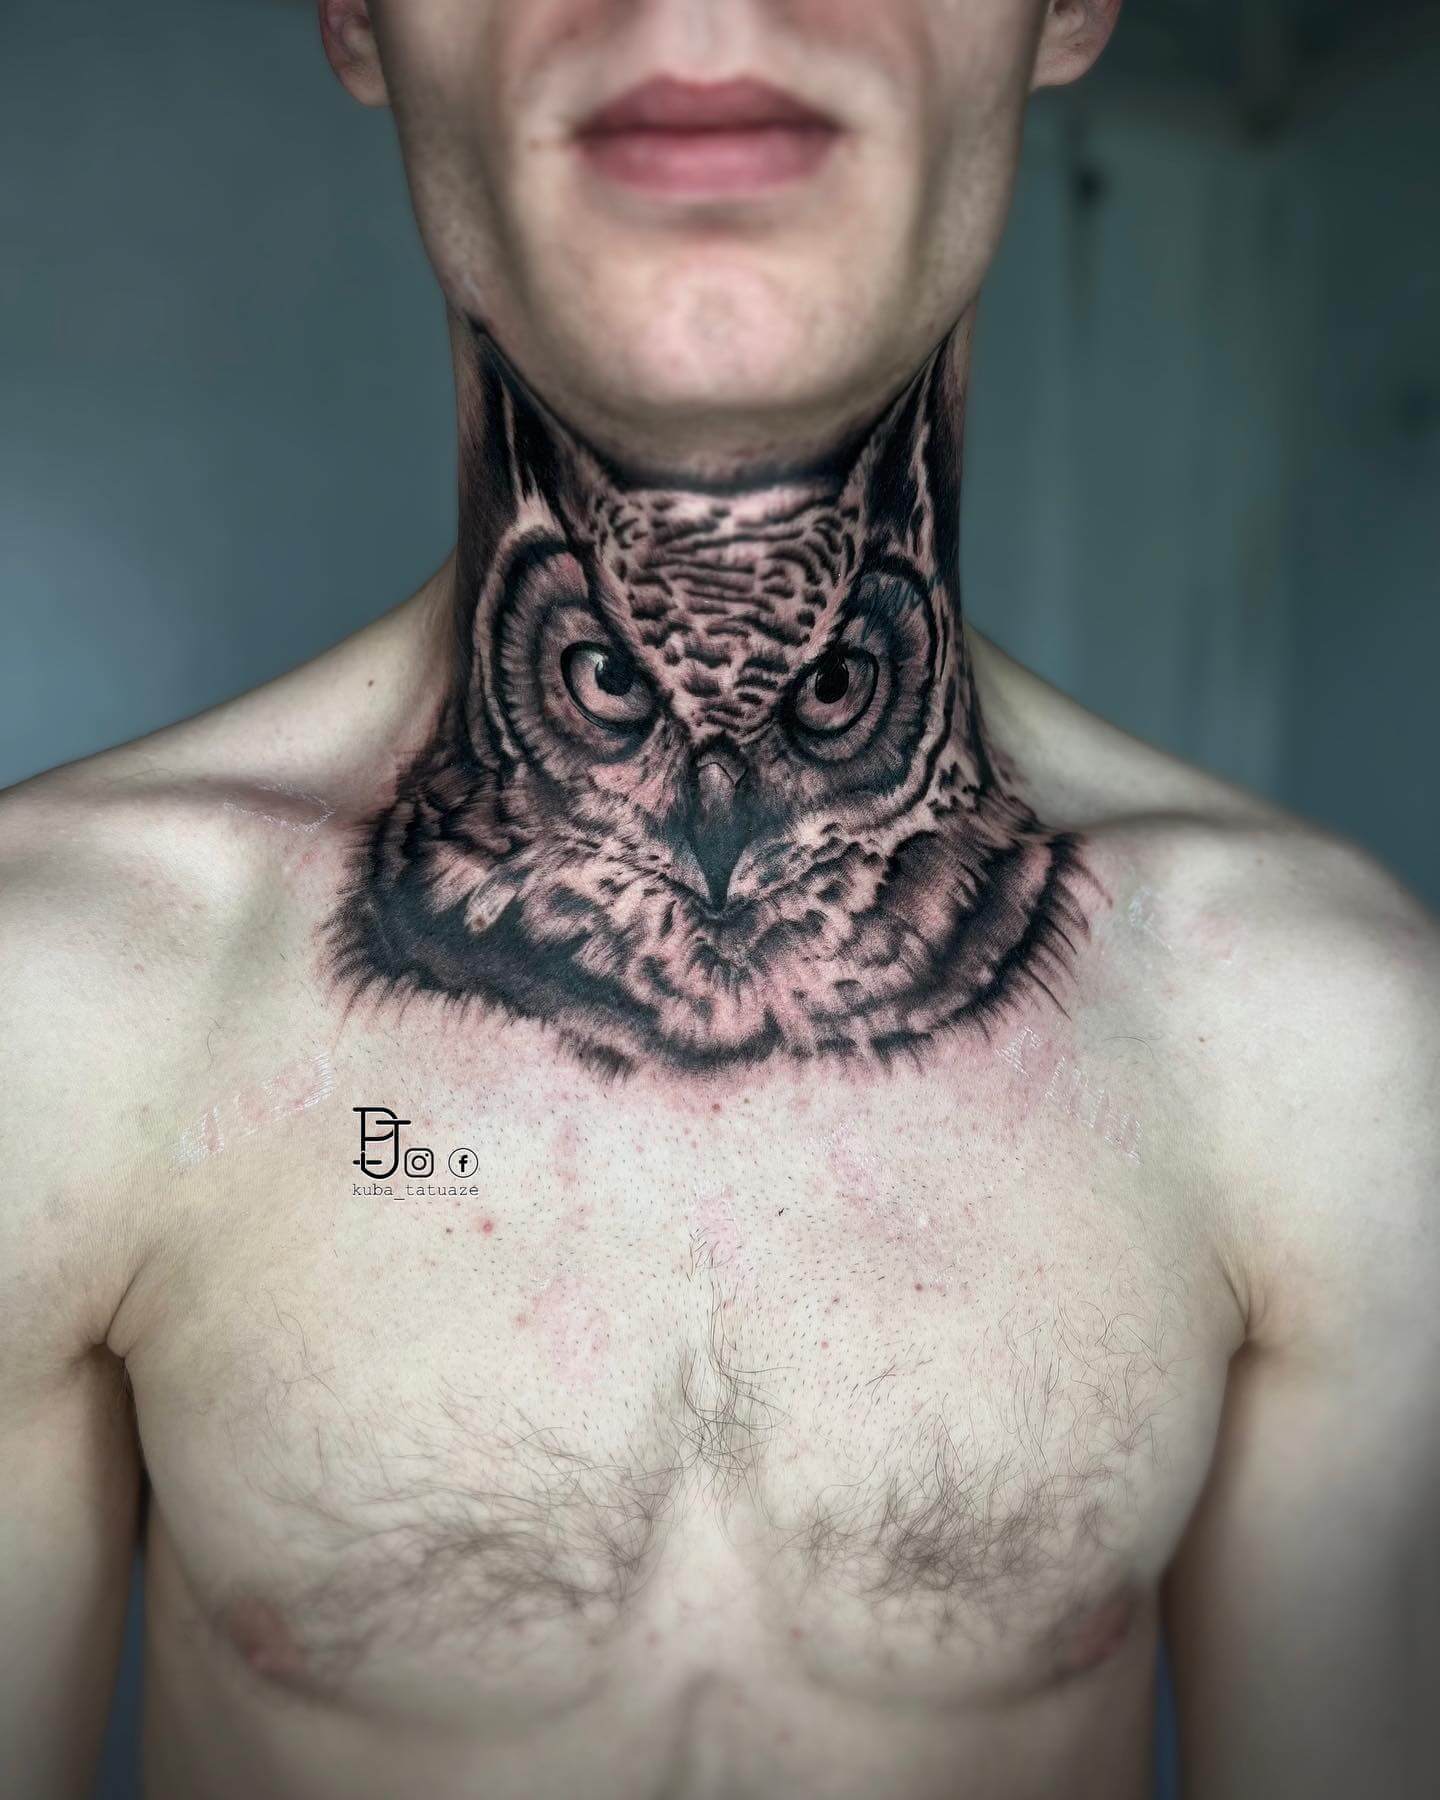 nape of neck tattoo stick and poke lightning bolt | Bolt tattoo, Neck tattoo,  Tattoos